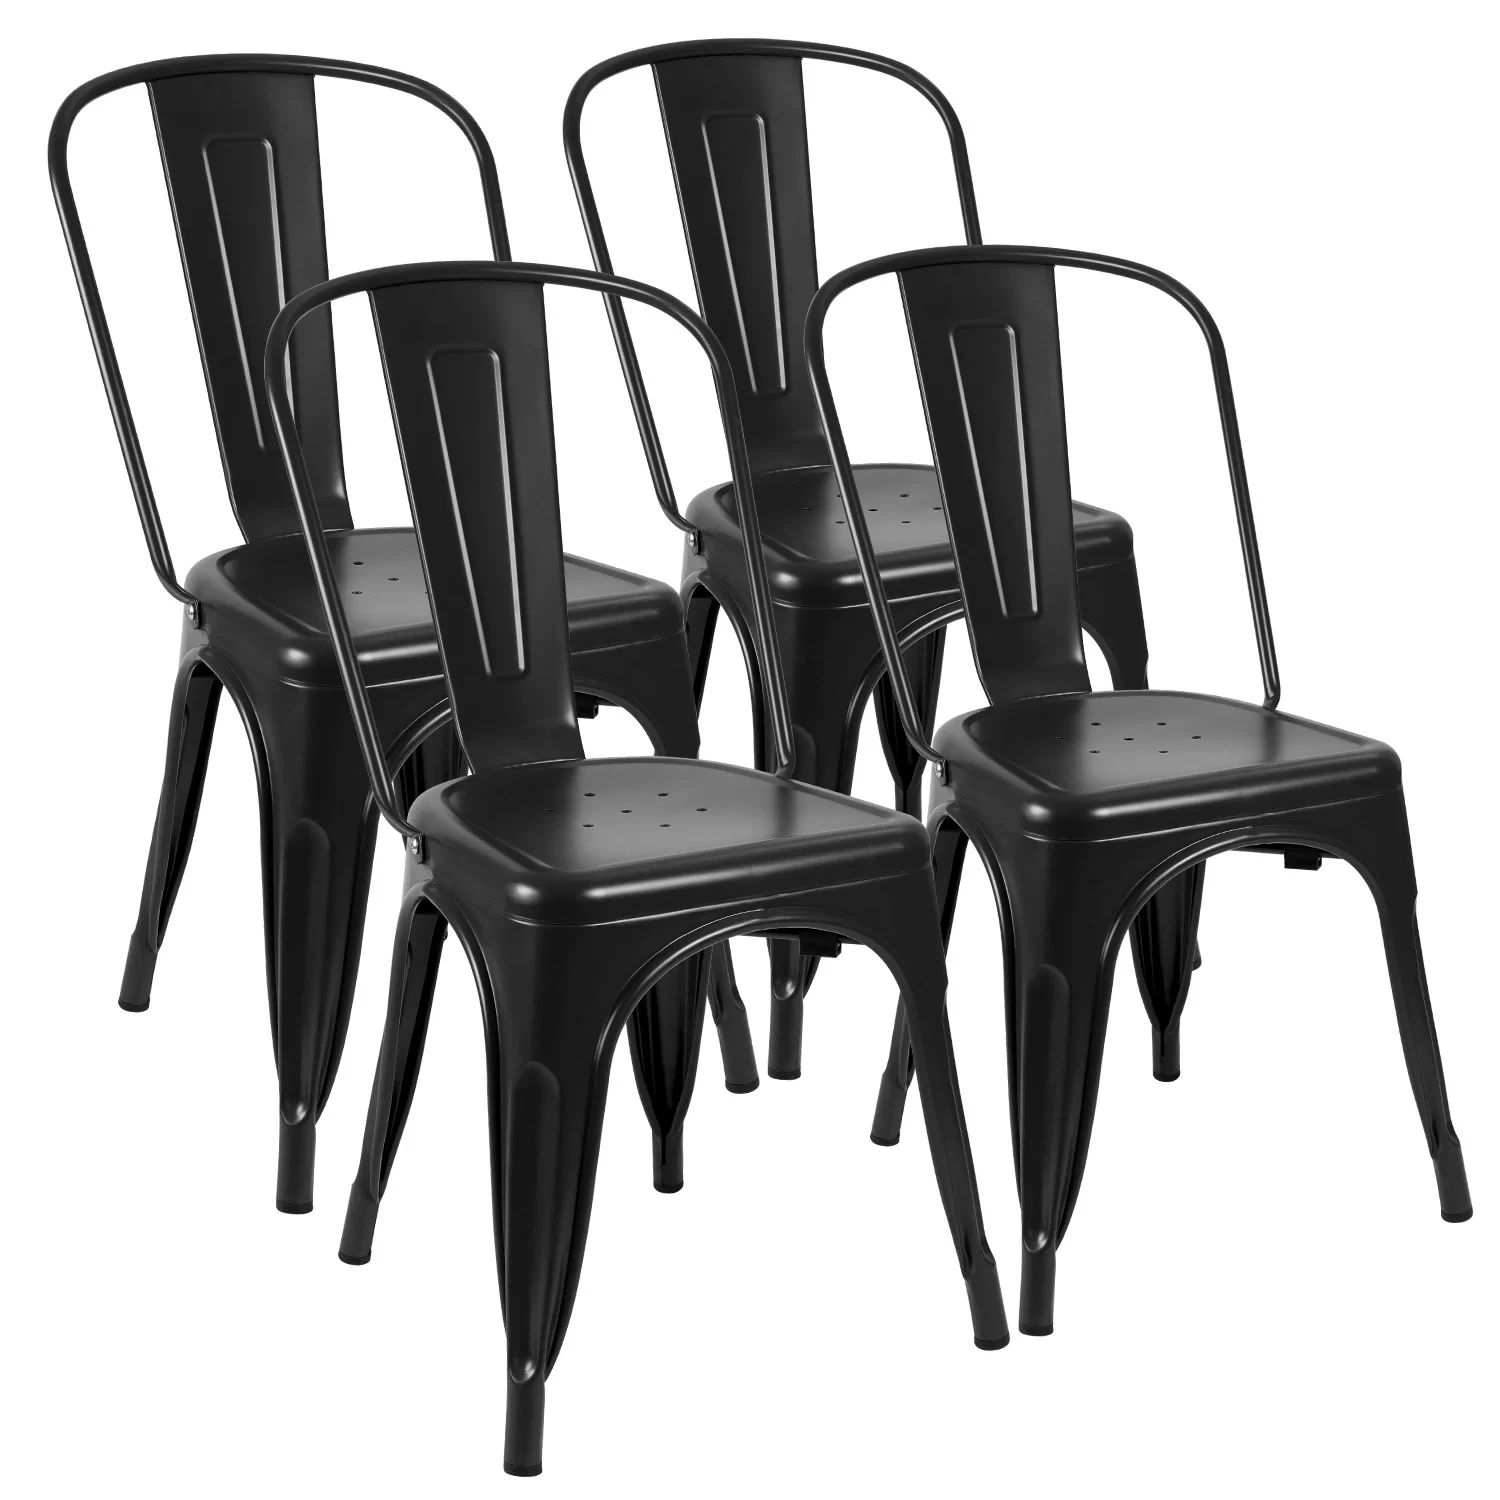 Borowski Iron Slat Back Stacking Side Chair (Set of 4) | Wayfair Professional